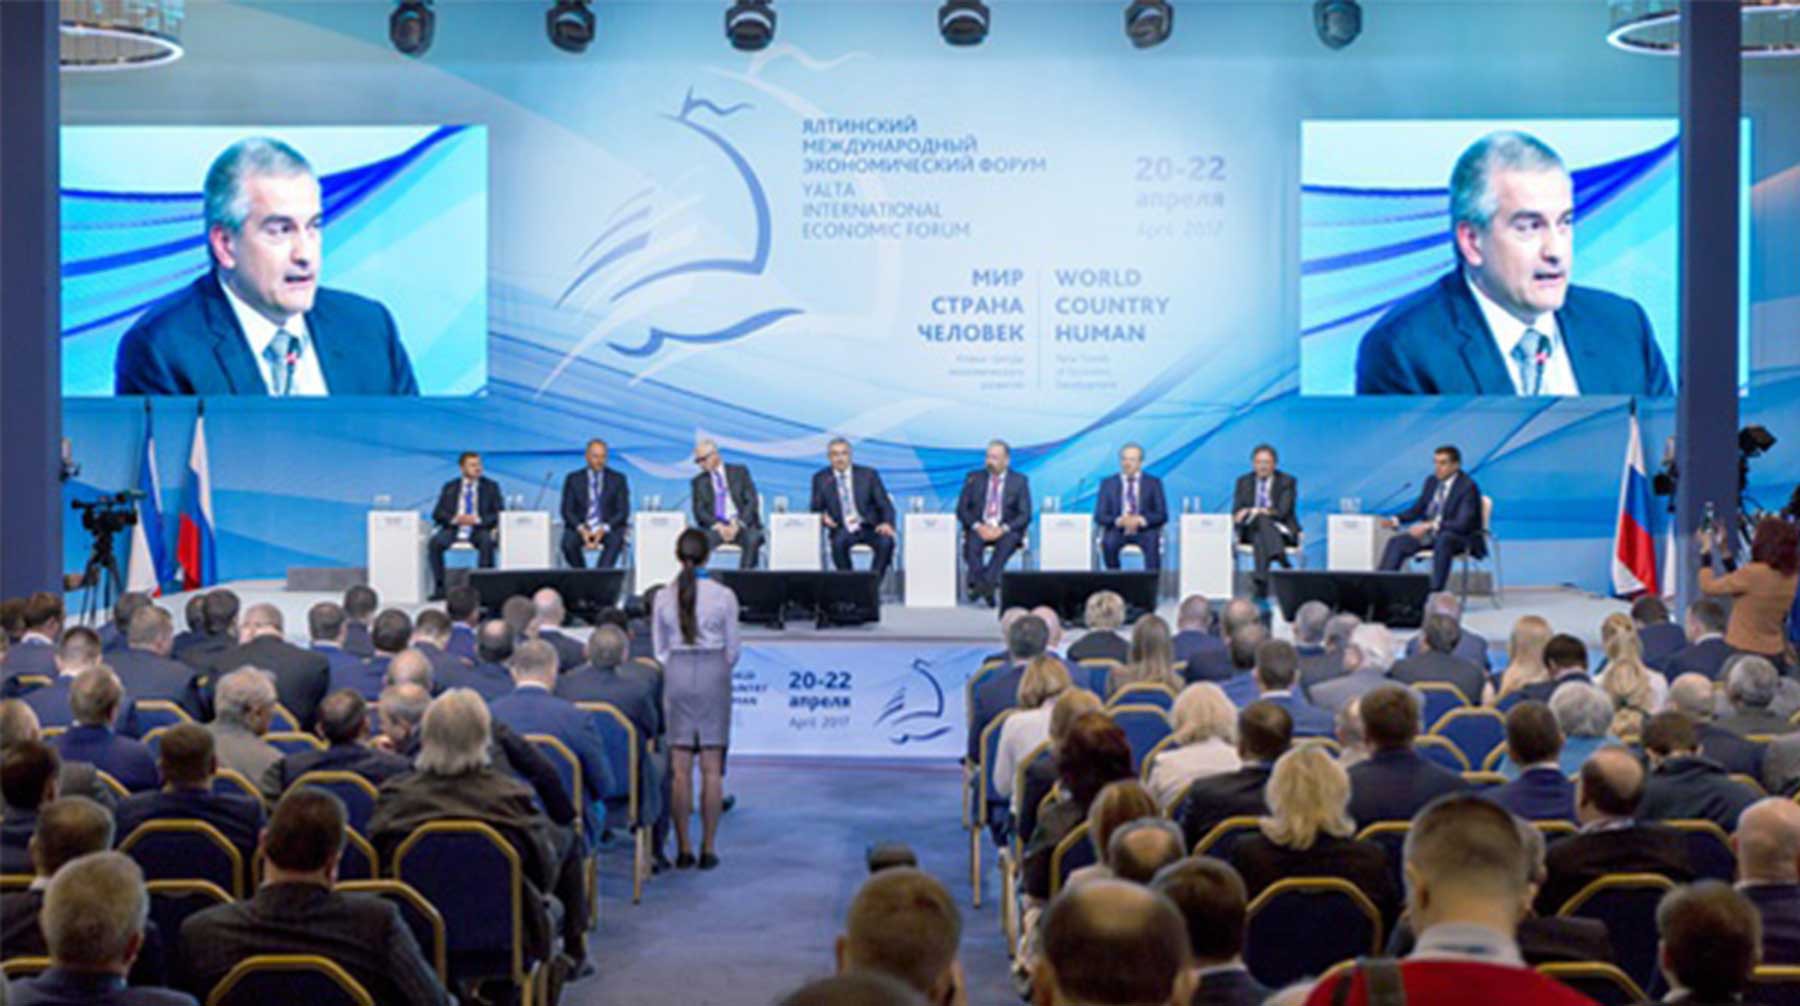 Dailystorm - На форуме ЯМЭФ заключено соглашений на 215 миллиардов рублей